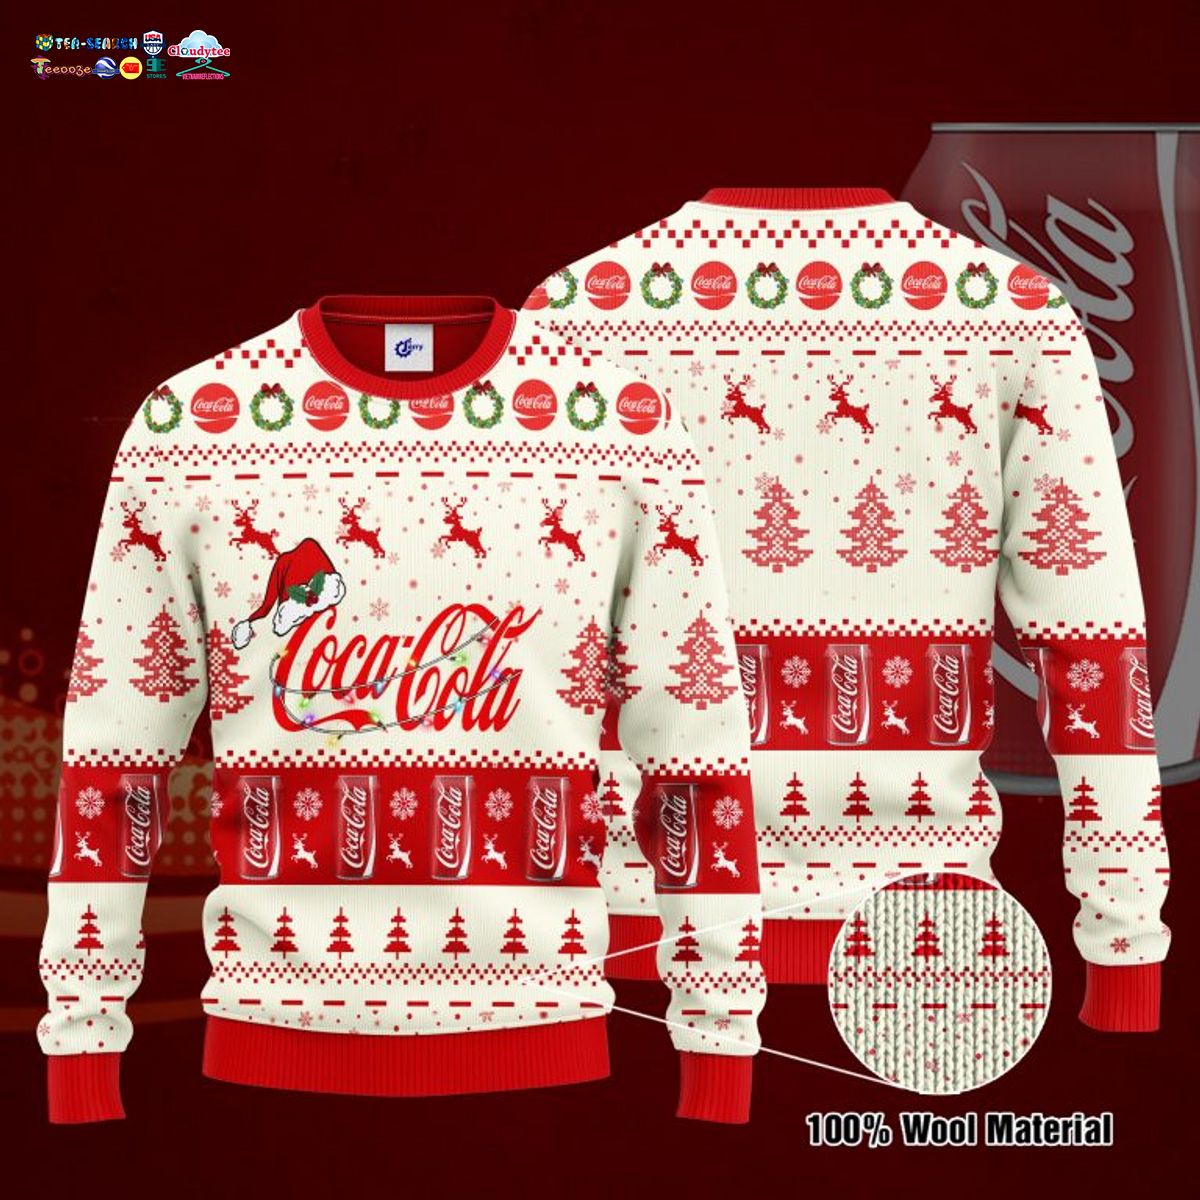 Coca Cola Santa Hat Ugly Christmas Sweater